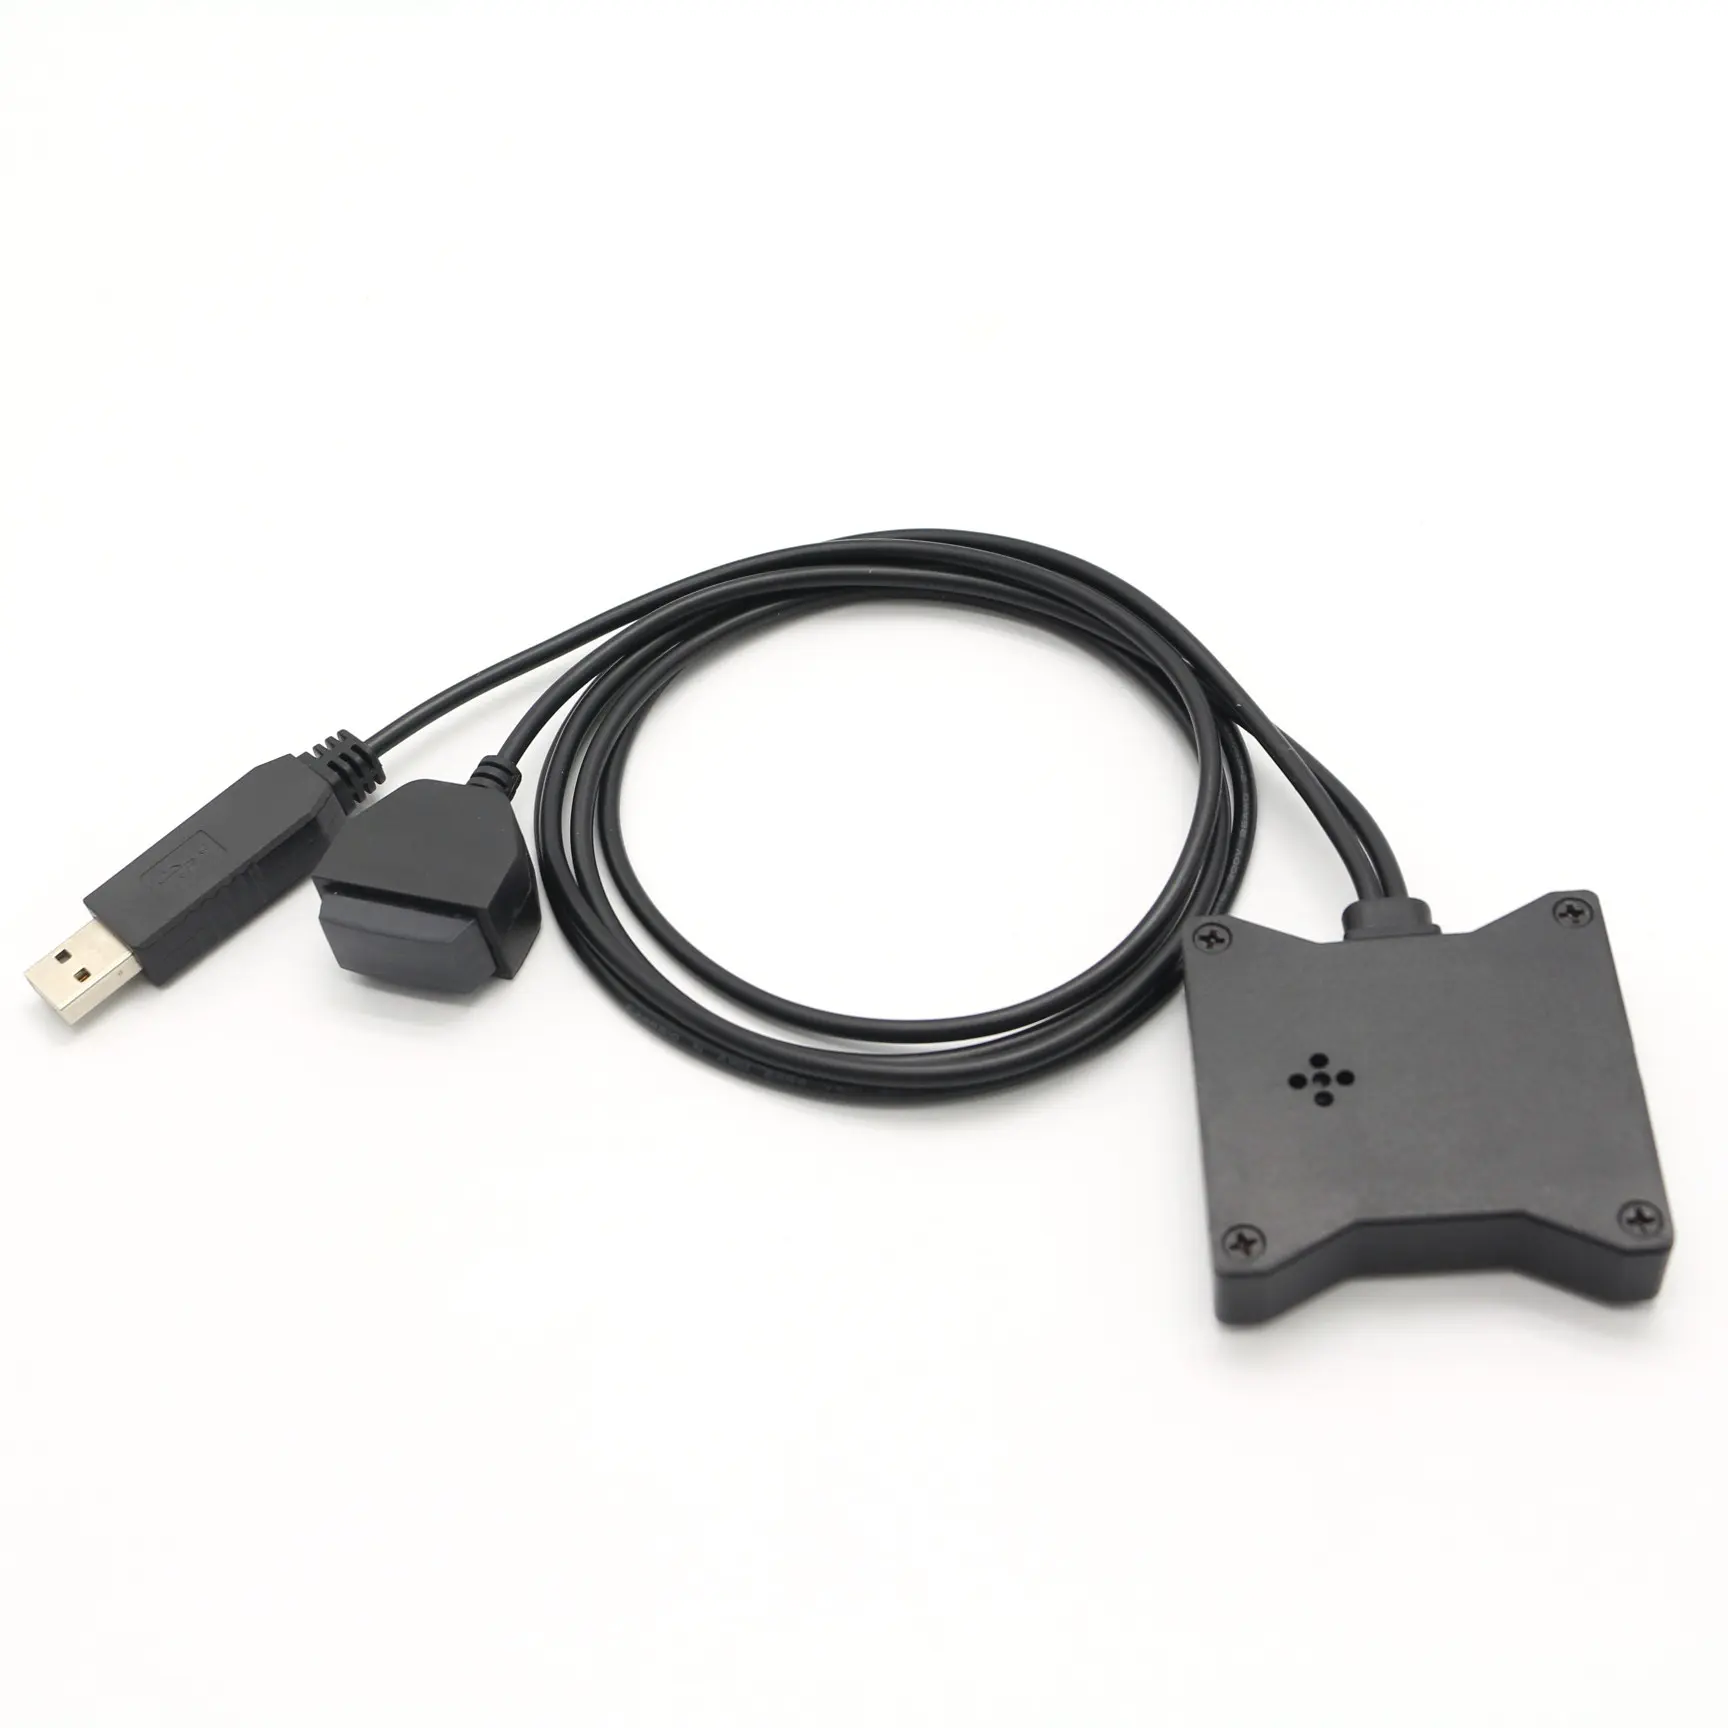 PIR-T-USB PIR cp2102 usb 2.0 cable EKMC1605112 Temperature sensor Device for Television lighting device